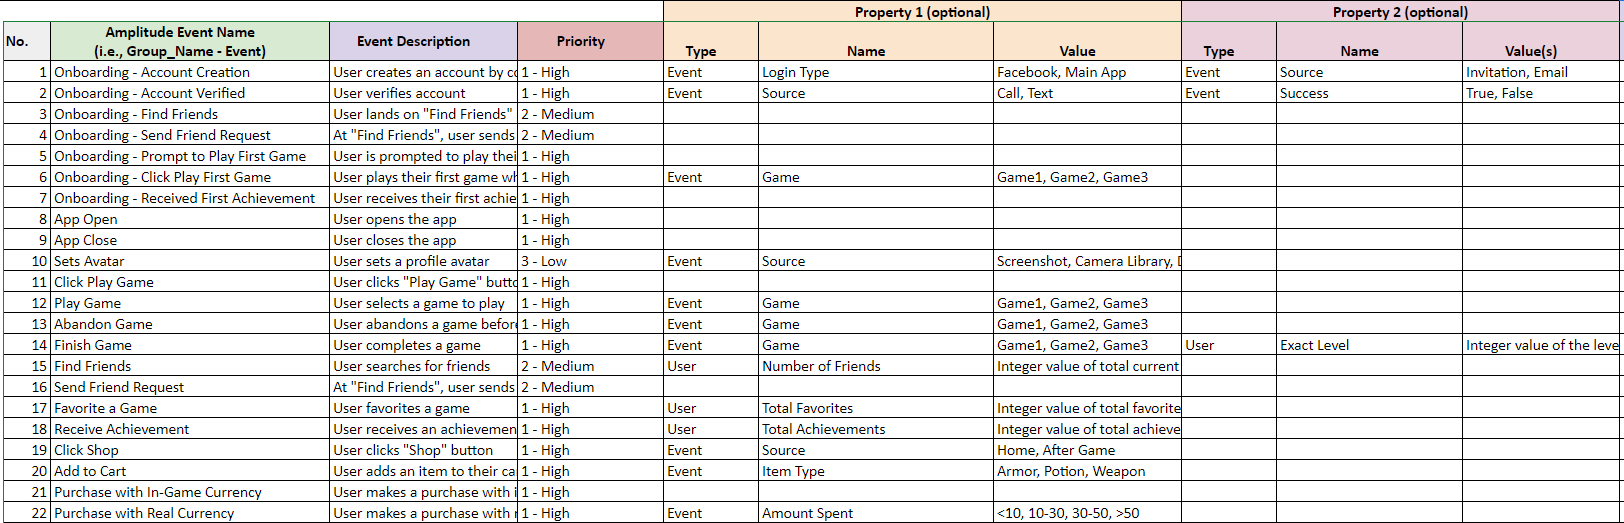 таблица-пример классификации событий